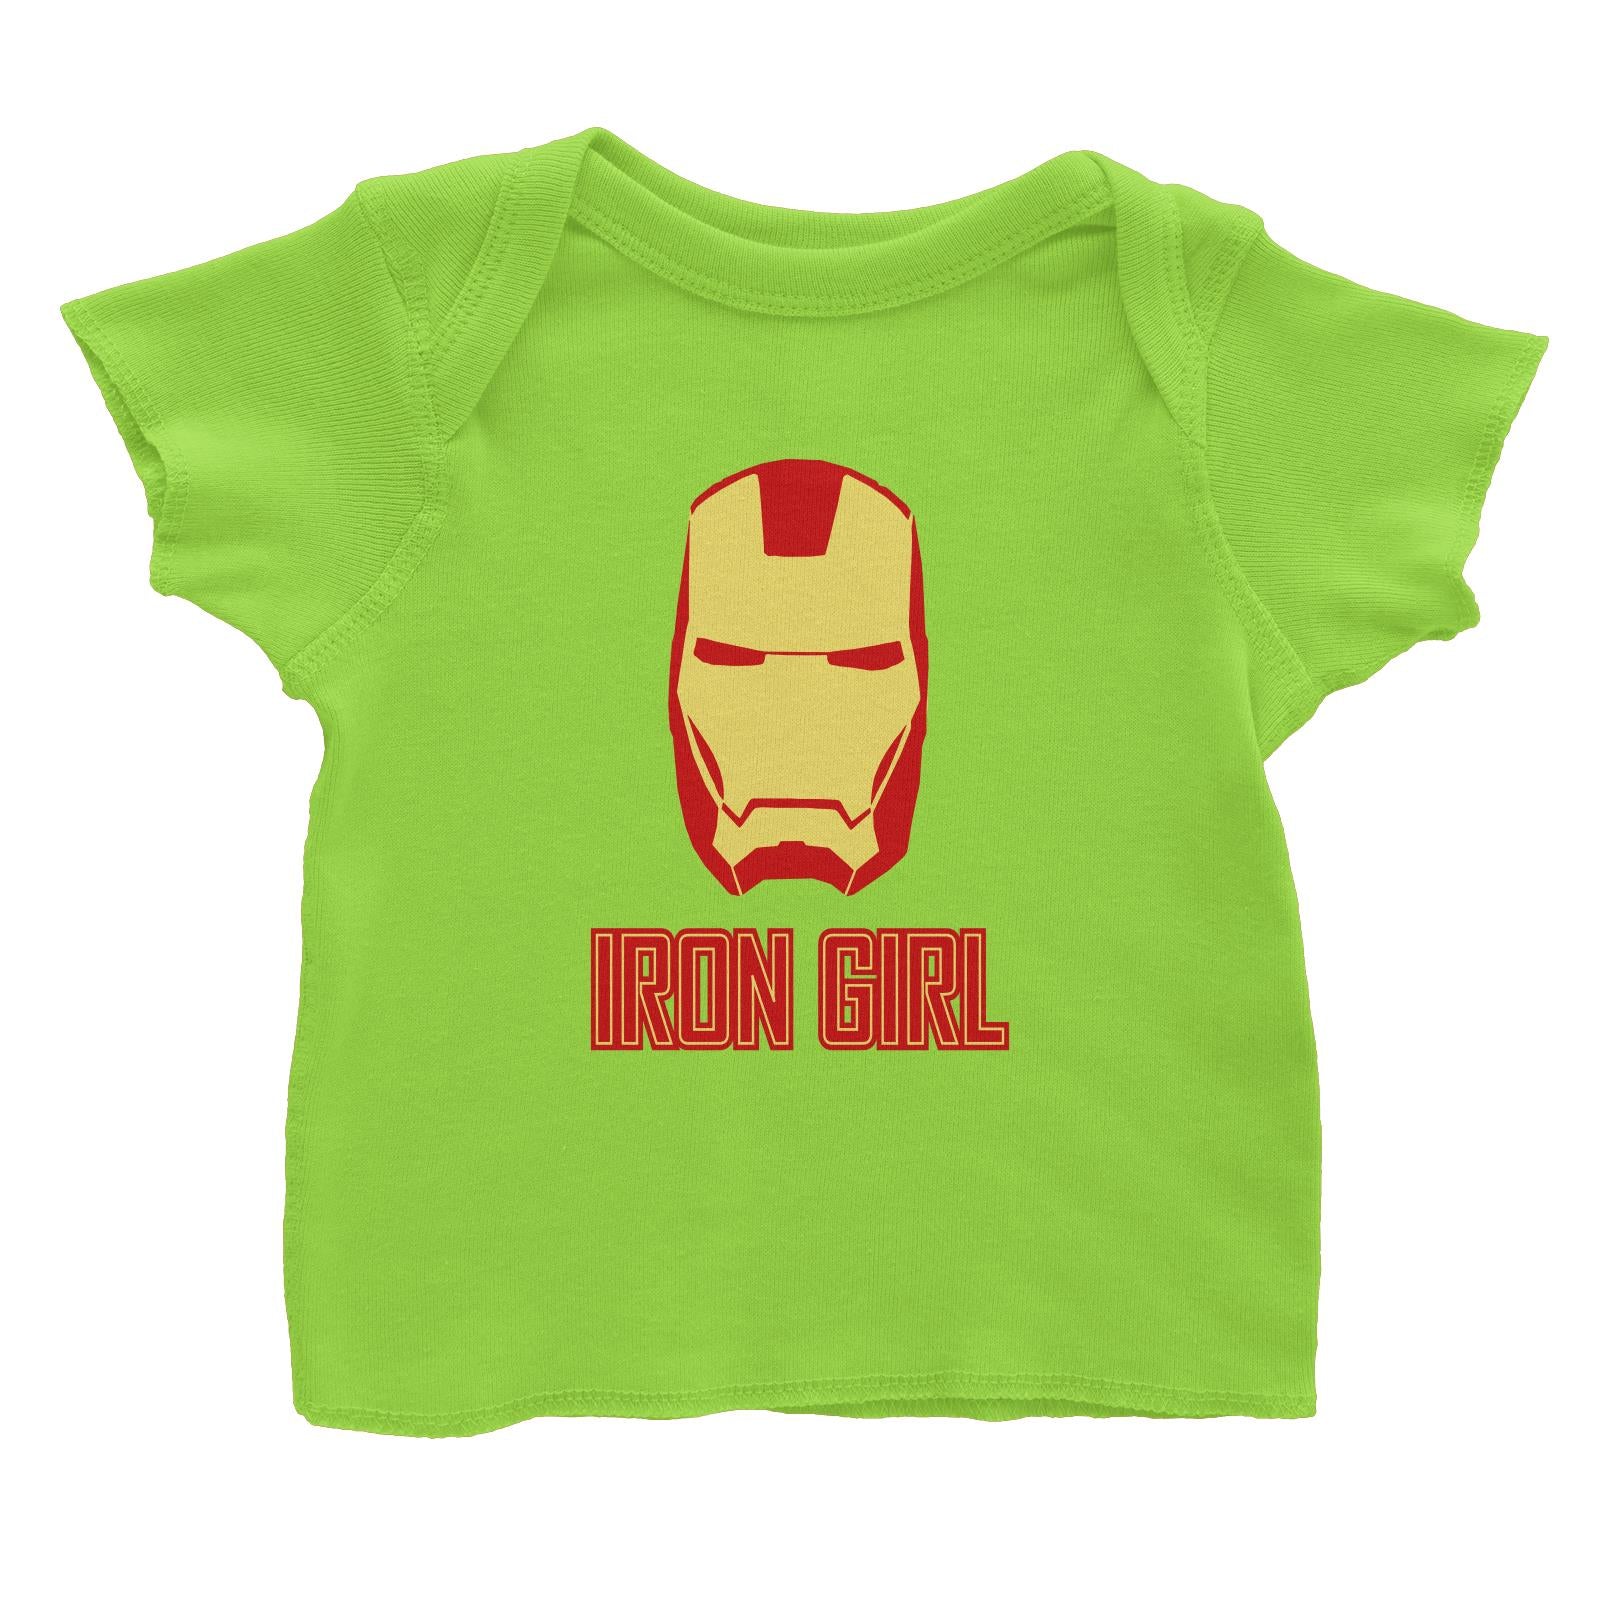 Superhero Iron Girl Baby T-Shirt  Matching Family Personalizable Designs